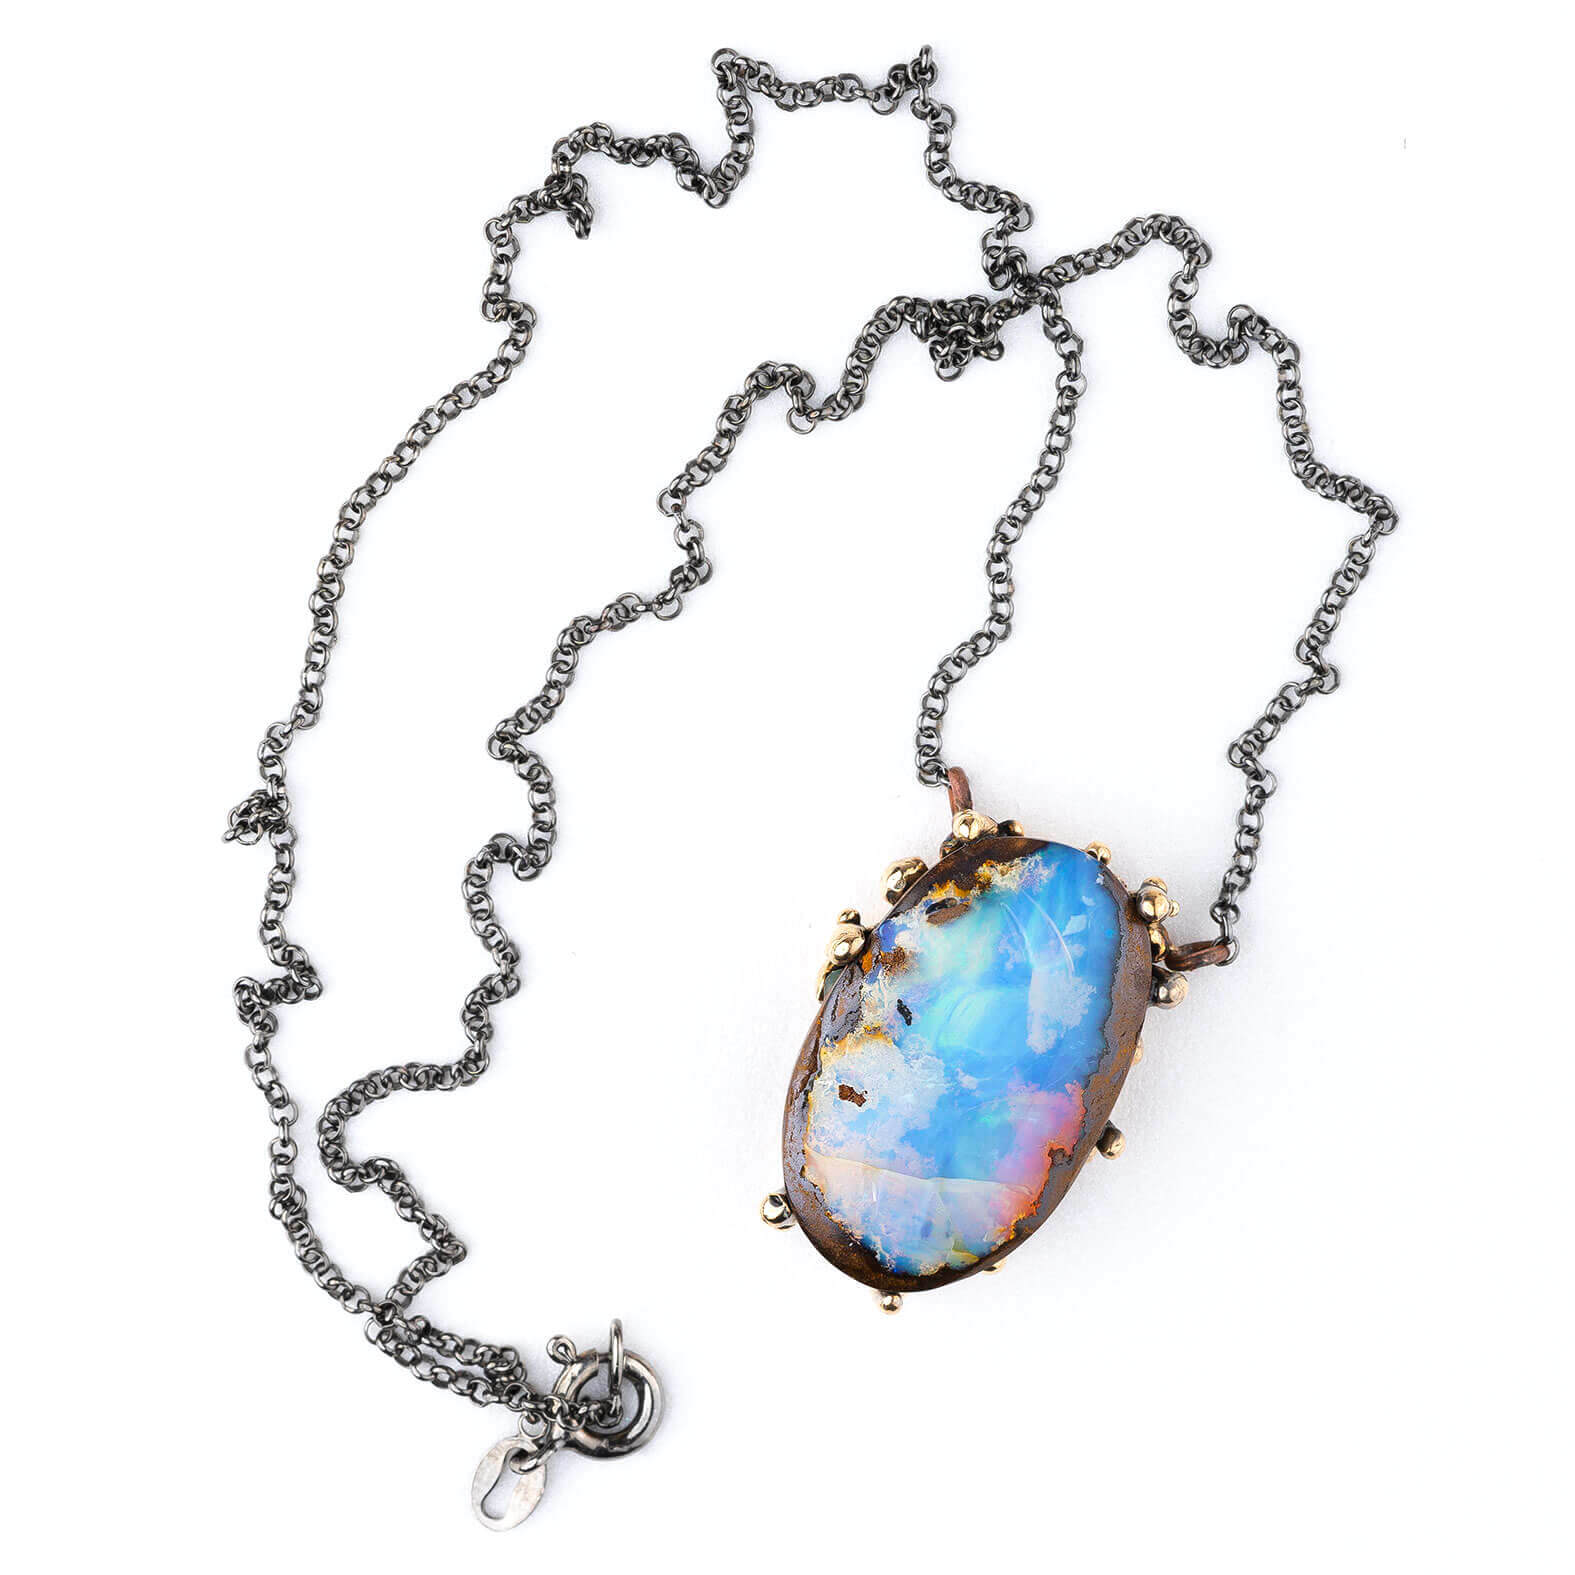 Princess' Silver Triplet Opal Necklace - Black Star Opal